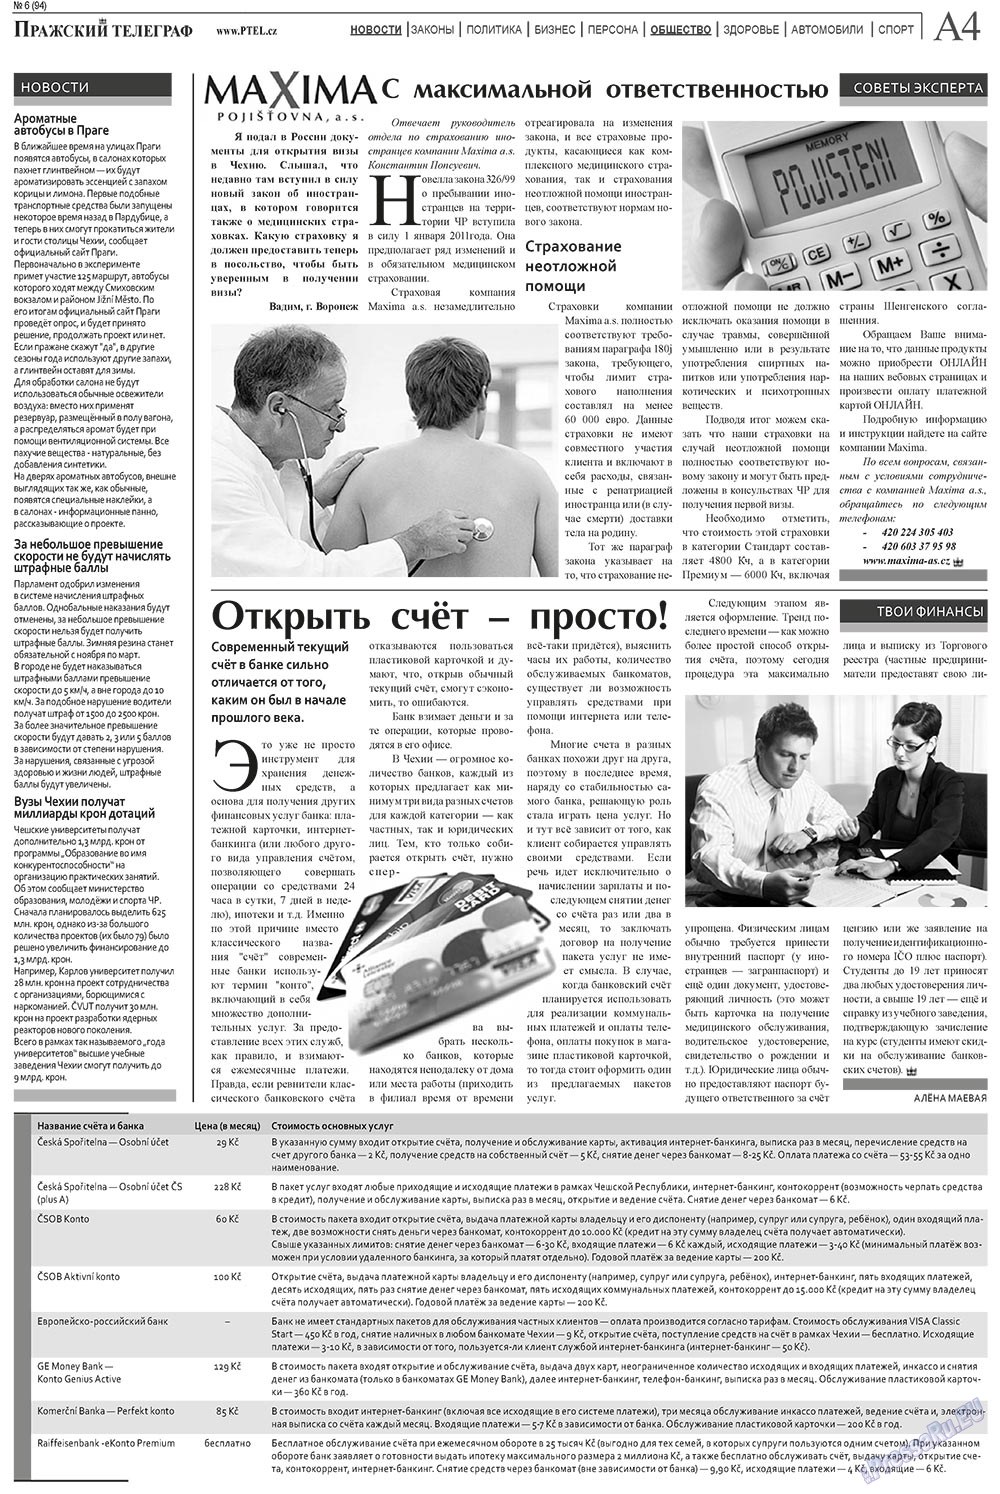 Пражский телеграф, газета. 2011 №6 стр.4